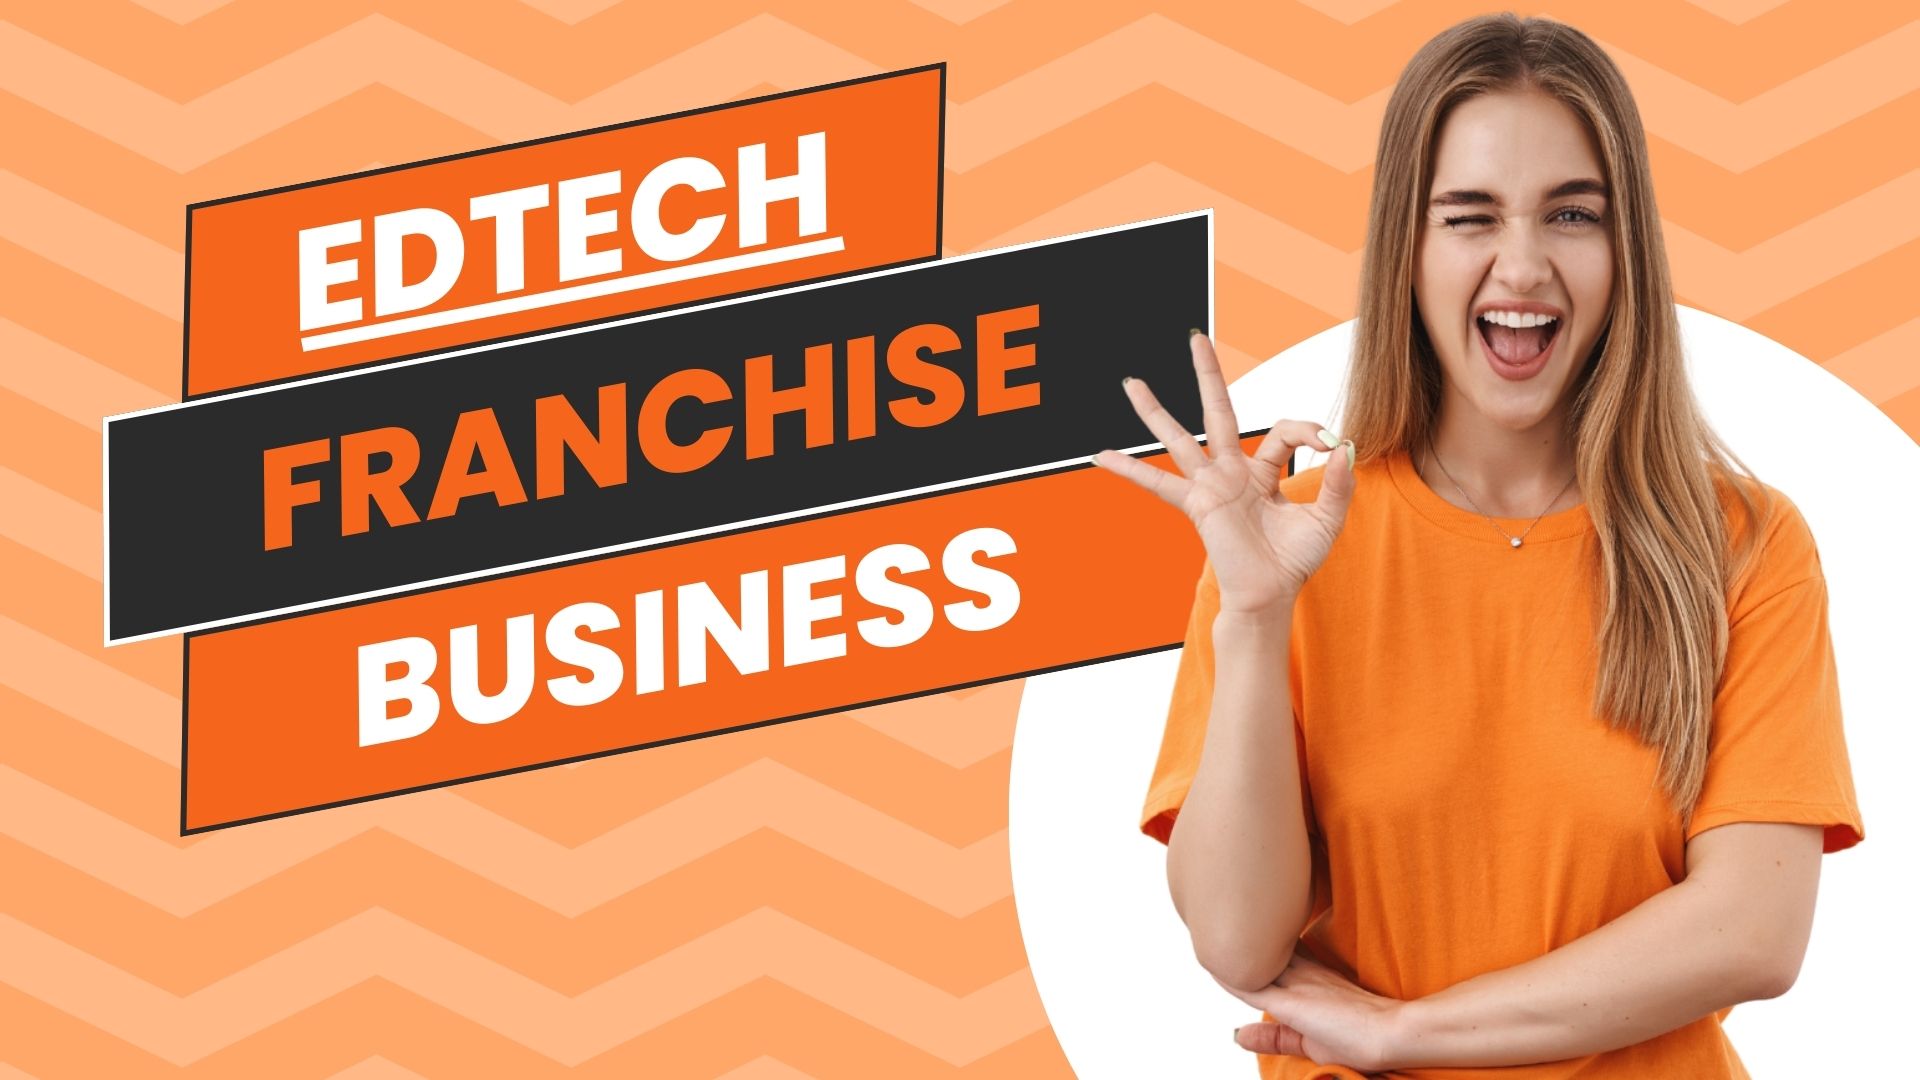 edtech franchise business